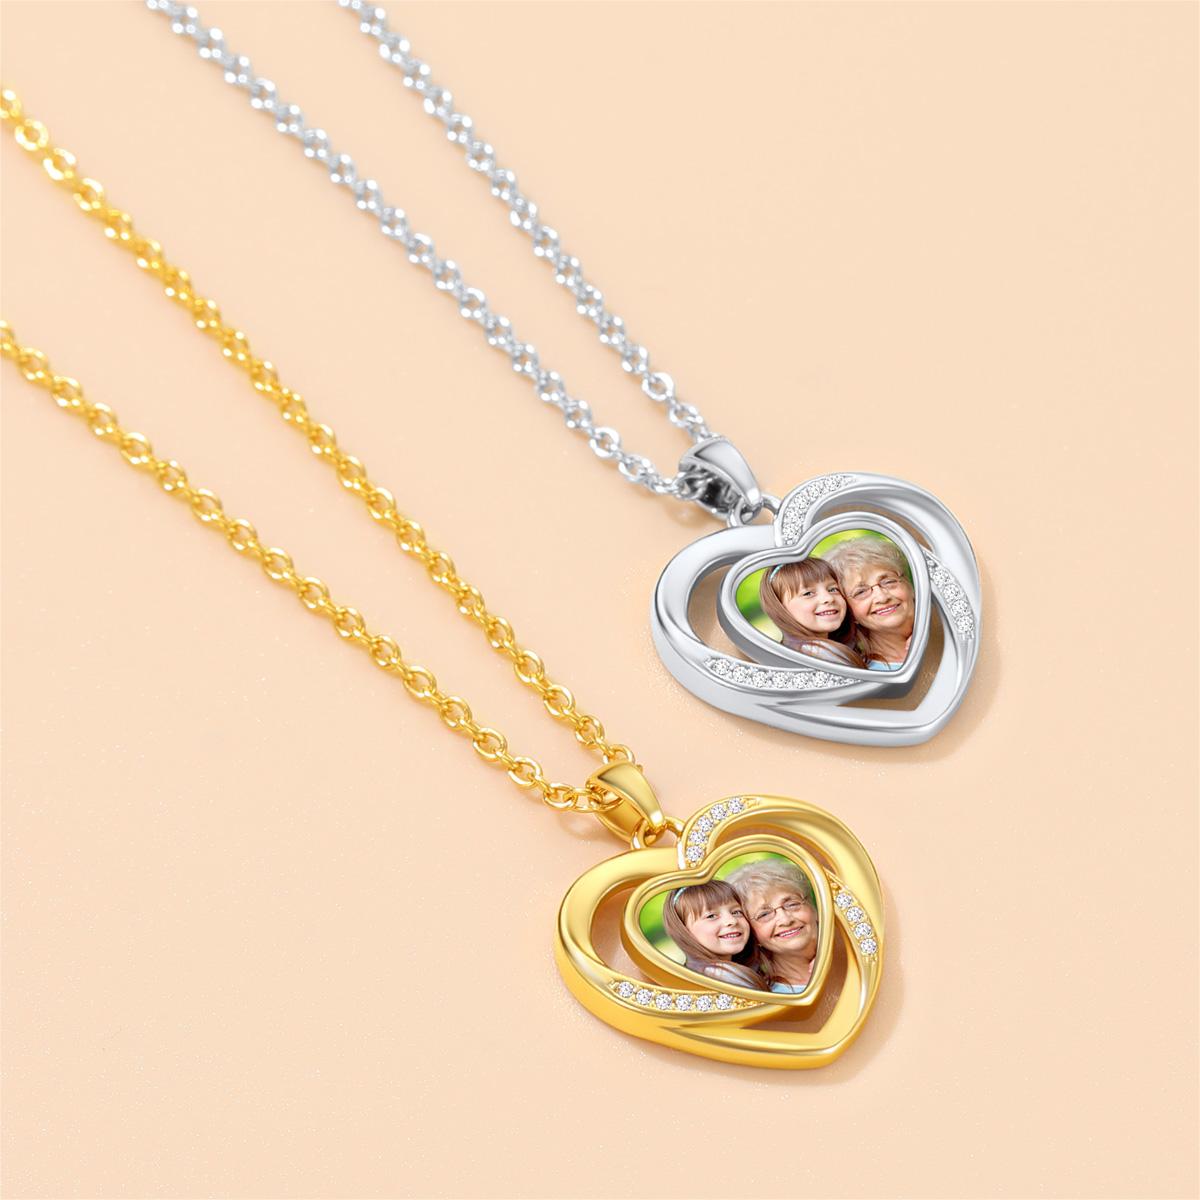 Birthstonesjewelry Heart in Heart Photo Necklace 2 Colors